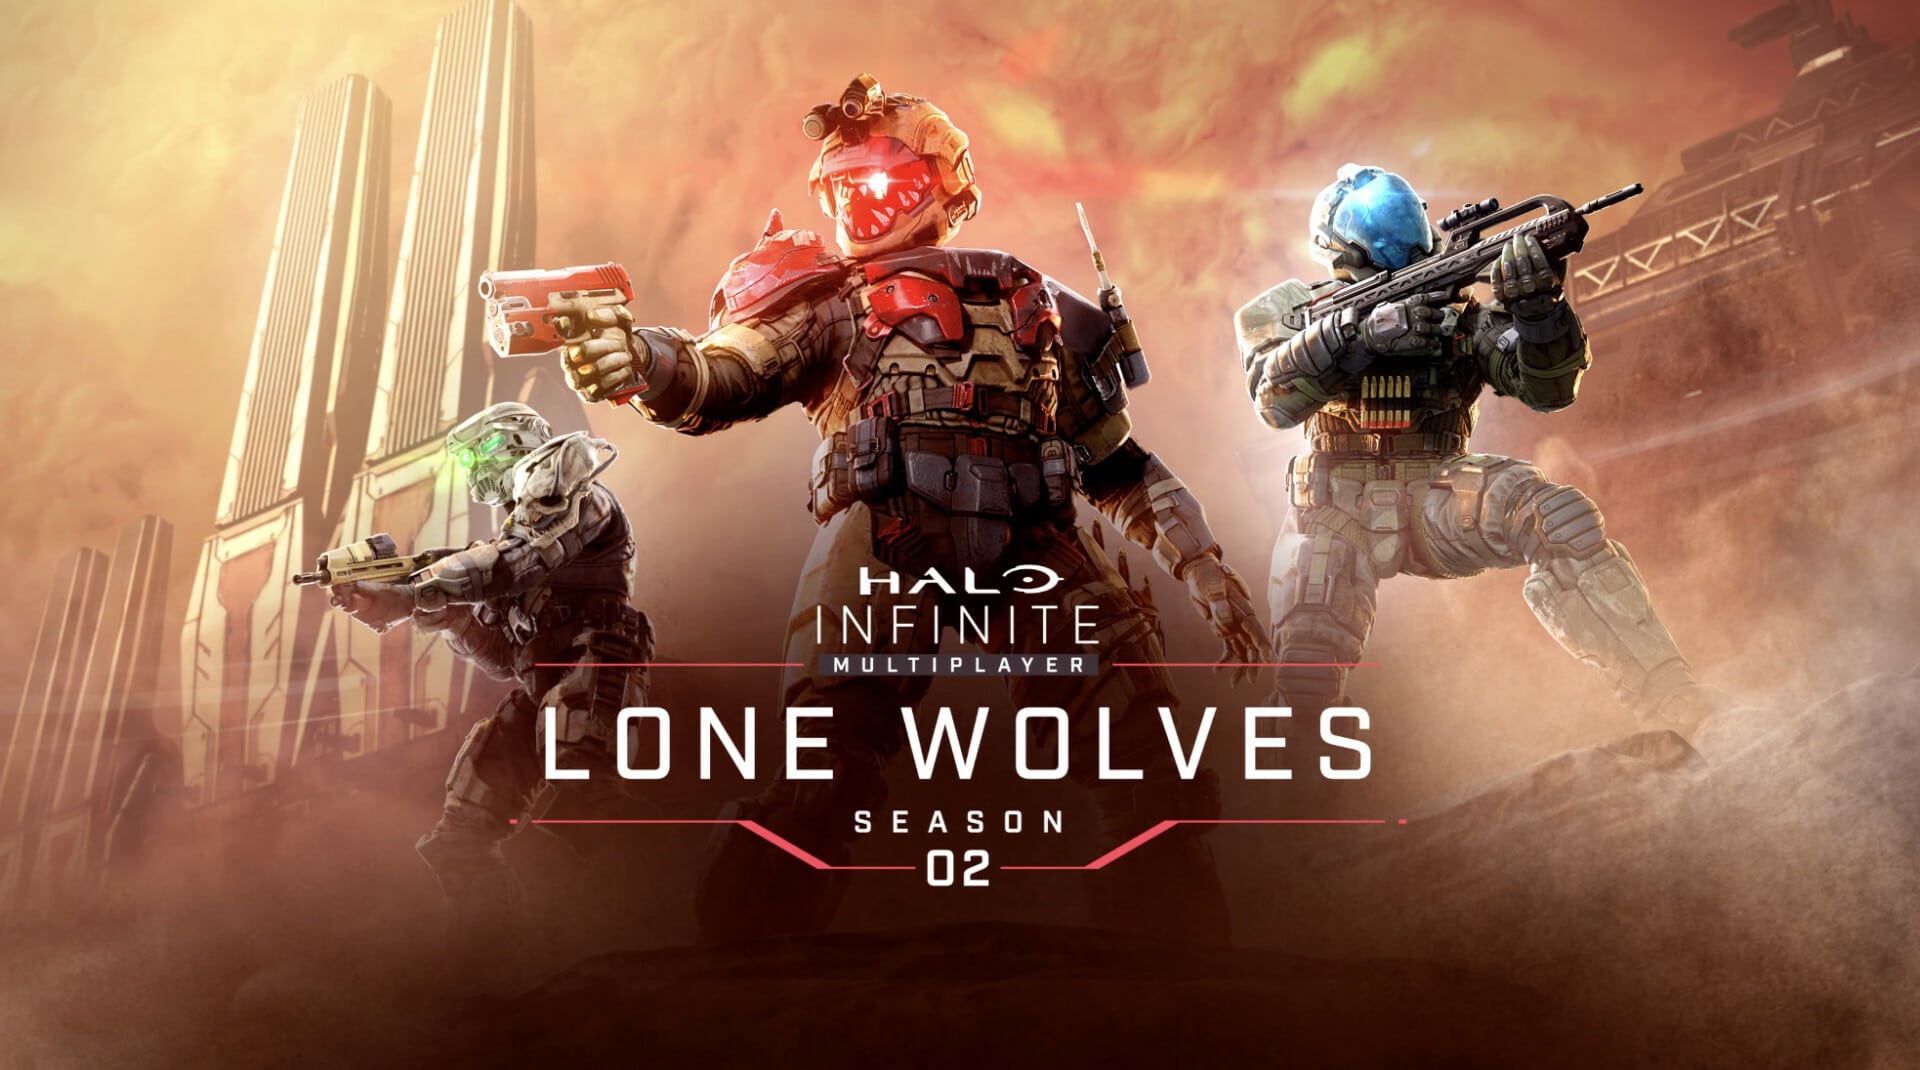 Halo Infinite Season 2 Trailer Lone Wolves Reveals New Maps, Modes